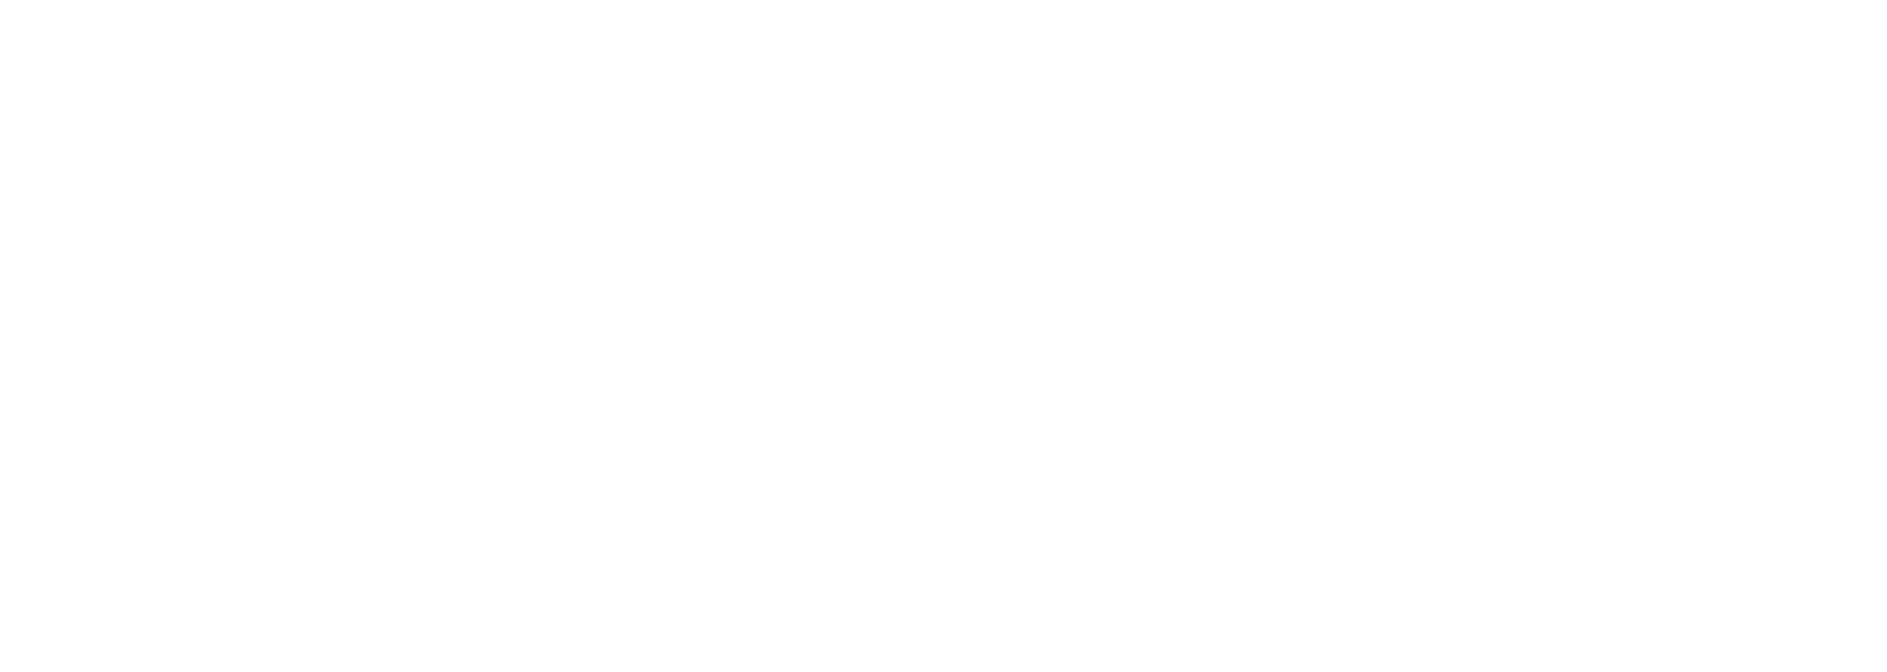 SantiagoCFT-Admision-logo-acceso_905x322-150dpi